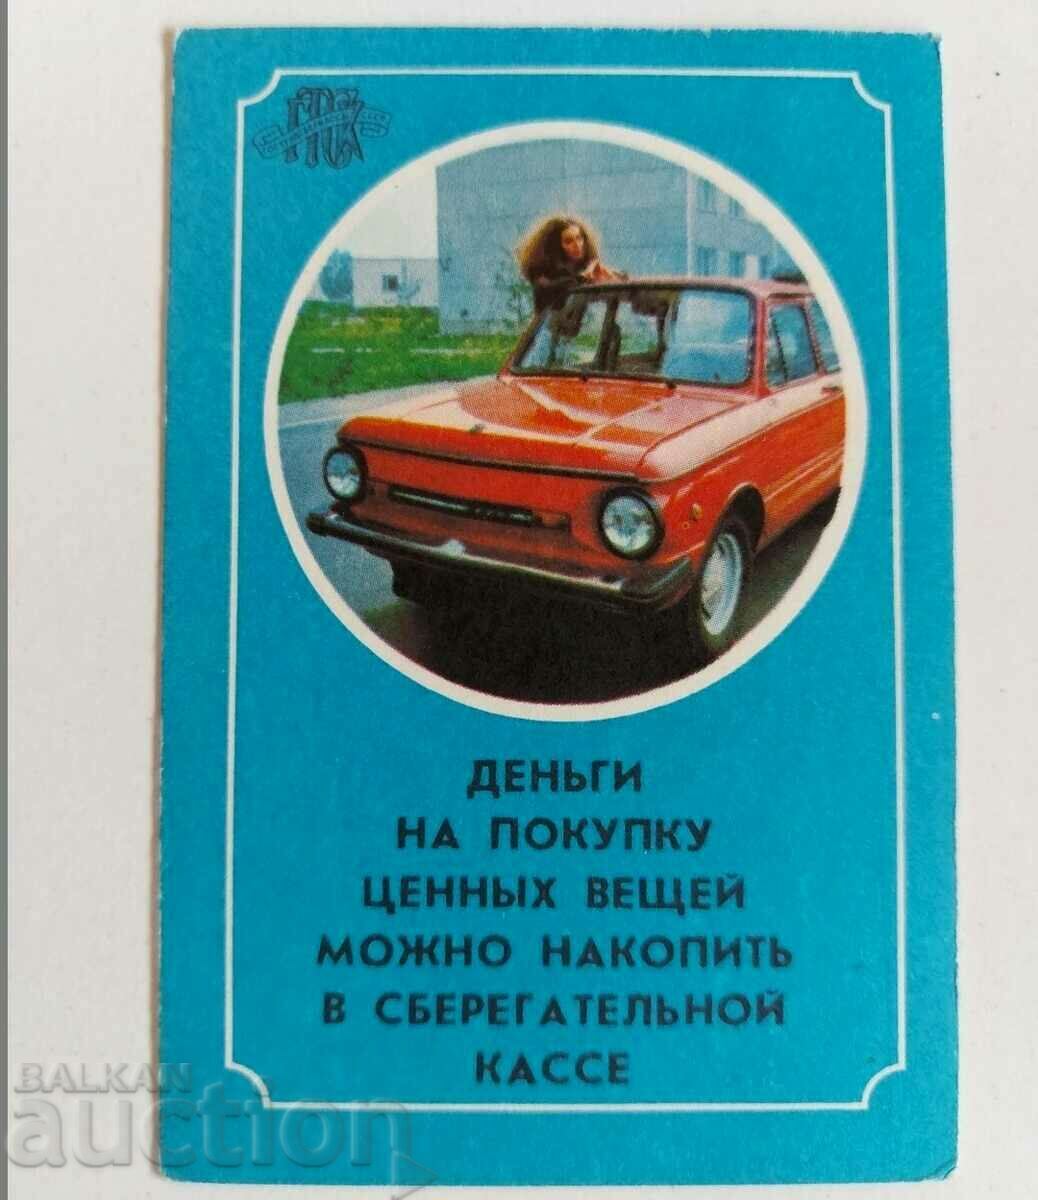 1982 SOCIAL CALENDAR CALENDAR CAR AUTOMOBILE USSR SOVIET